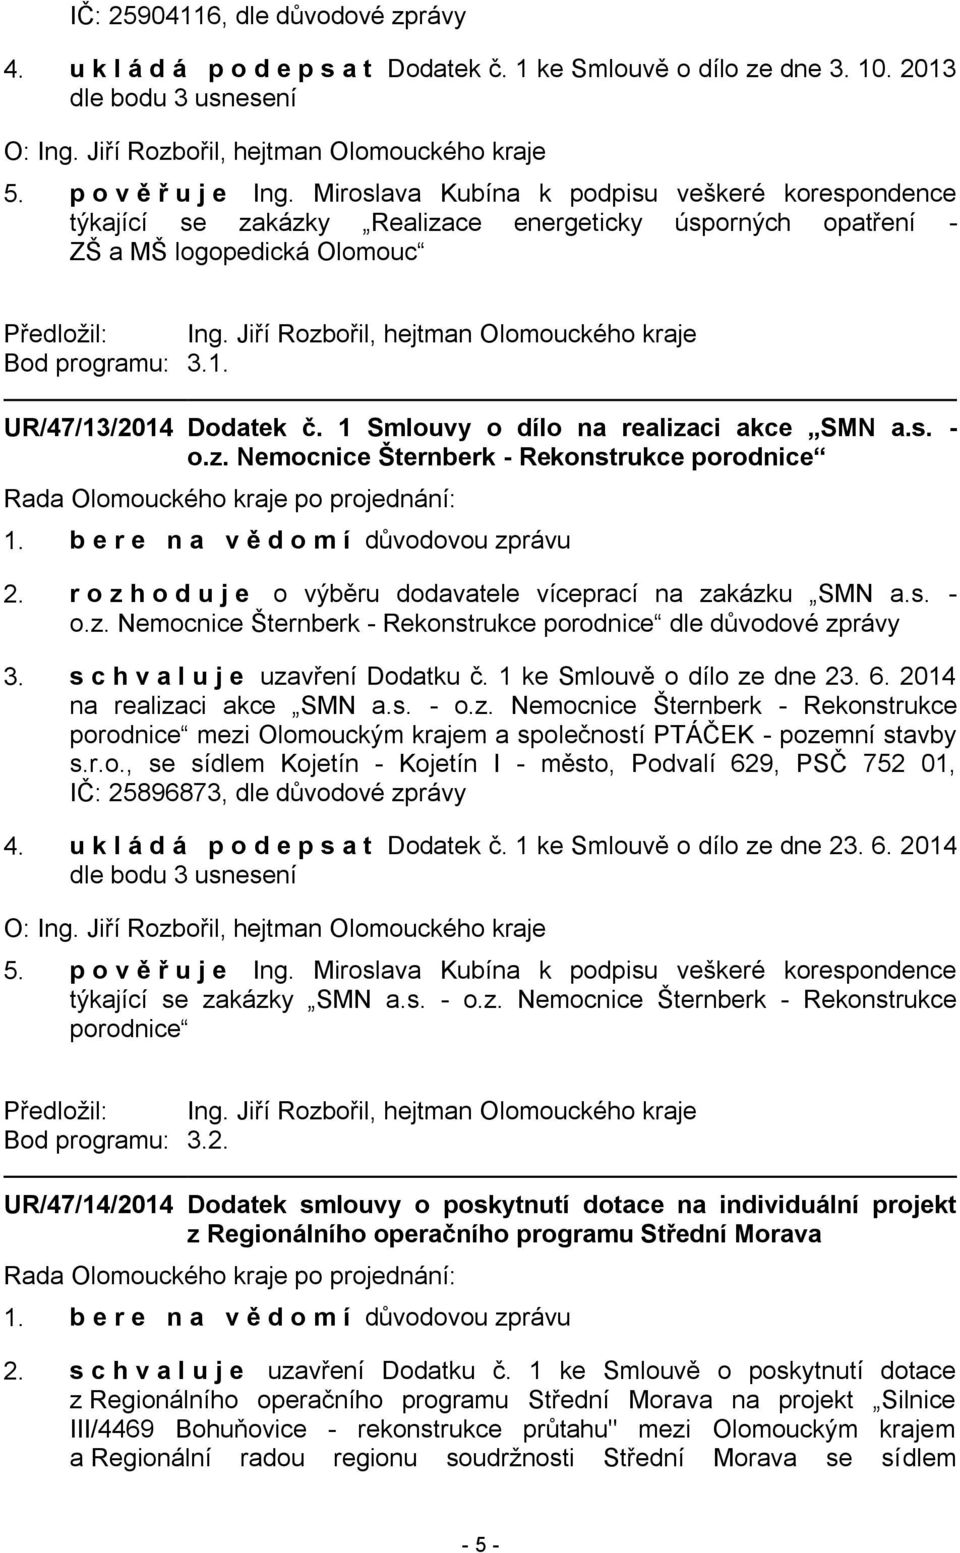 UR/47/13/2014 Dodatek č. 1 Smlouvy o dílo na realizaci akce SMN a.s. - o.z. Nemocnice Šternberk - Rekonstrukce porodnice 2. r o z h o d u j e o výběru dodavatele víceprací na zakázku SMN a.s. - o.z. Nemocnice Šternberk - Rekonstrukce porodnice dle důvodové zprávy 3.